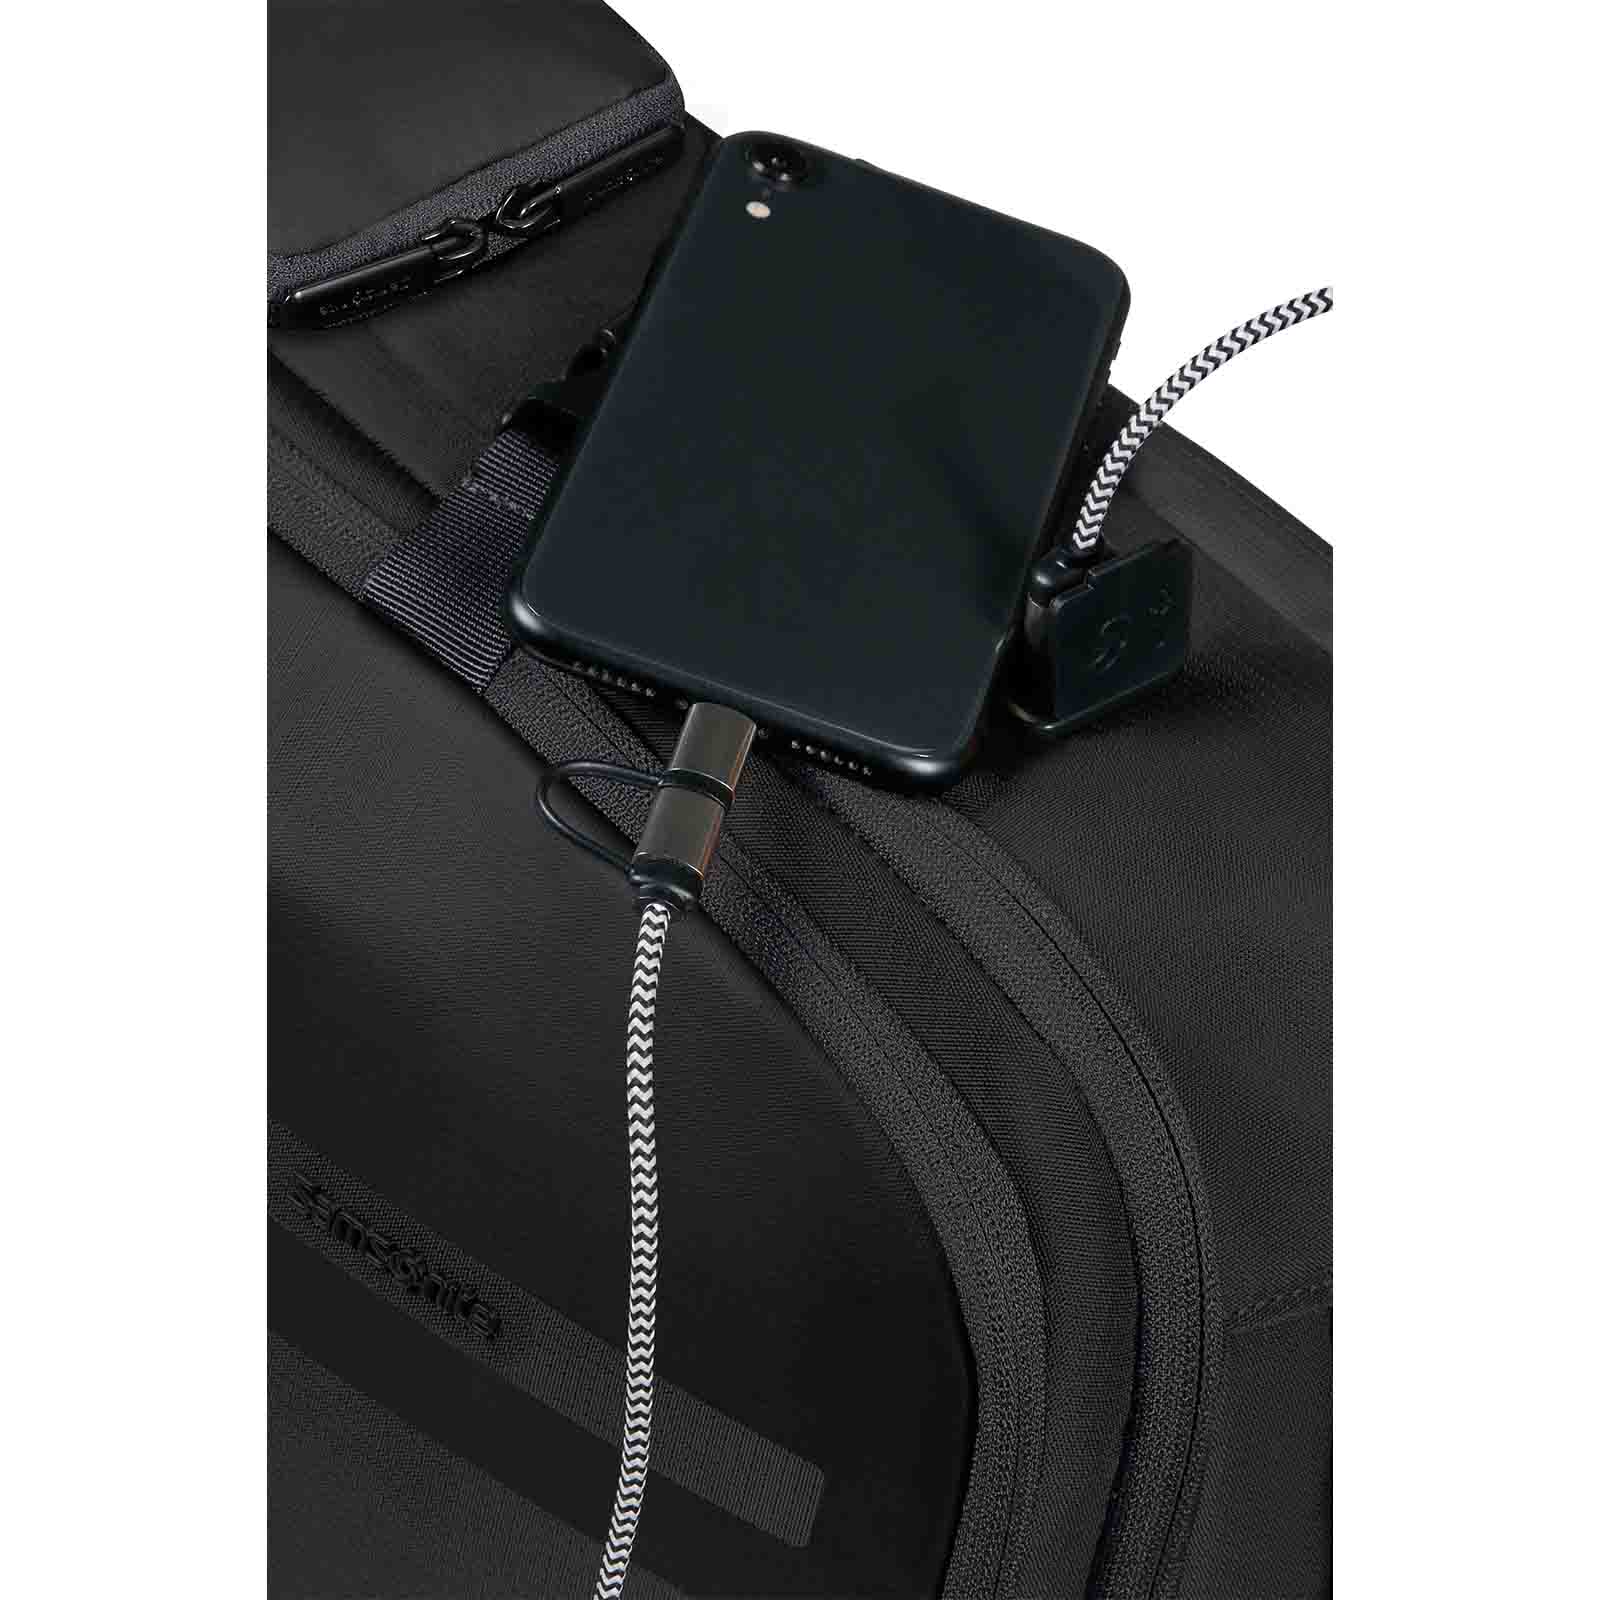 Samsonite-Biz2go-15-Inch-Laptop-Backpack-Black-Tech-Hub